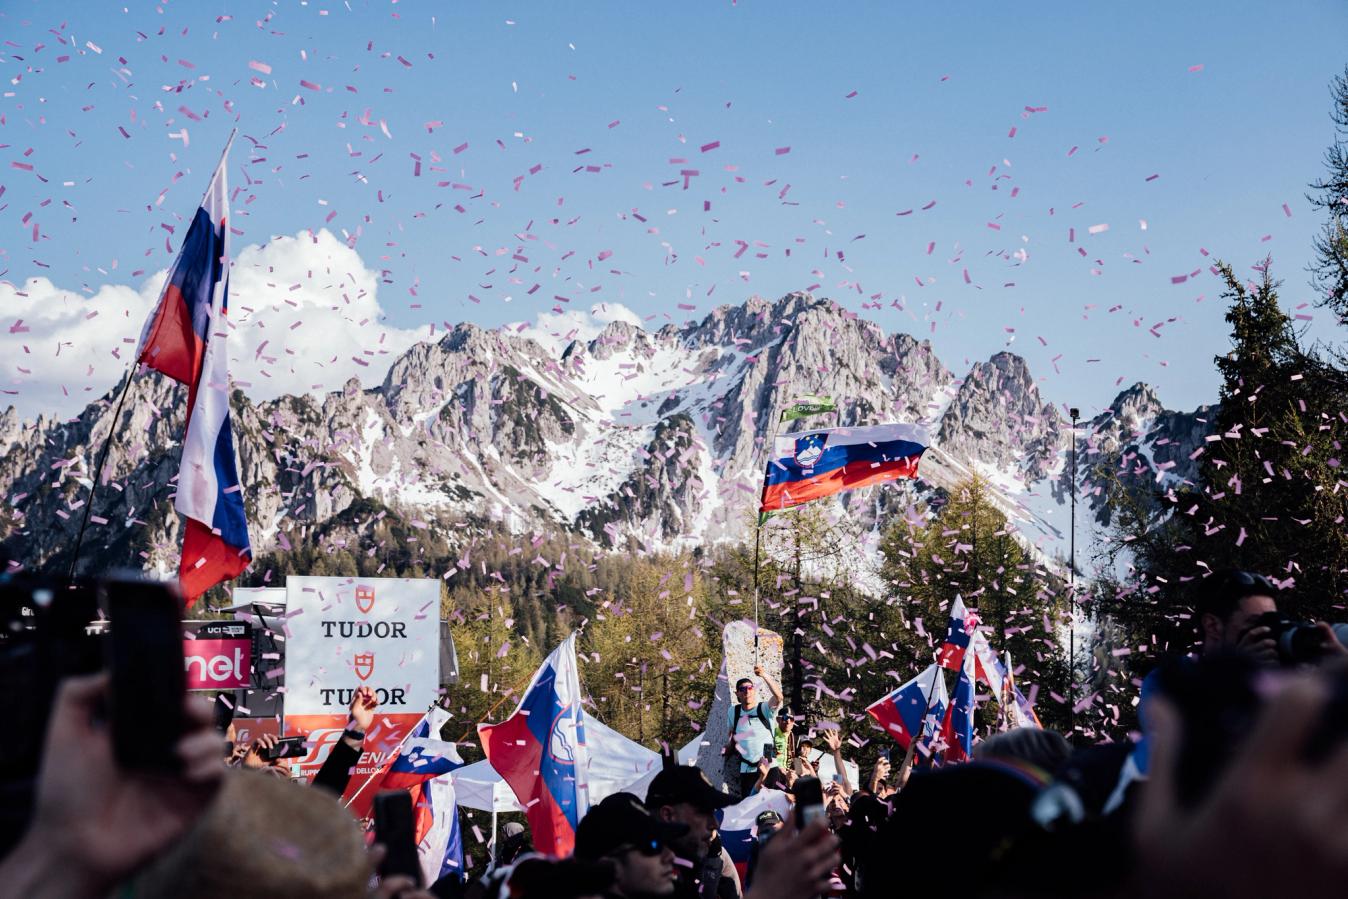 For the day on Monte Lussari, the Giro d'Italia became the Giro of Slovenia